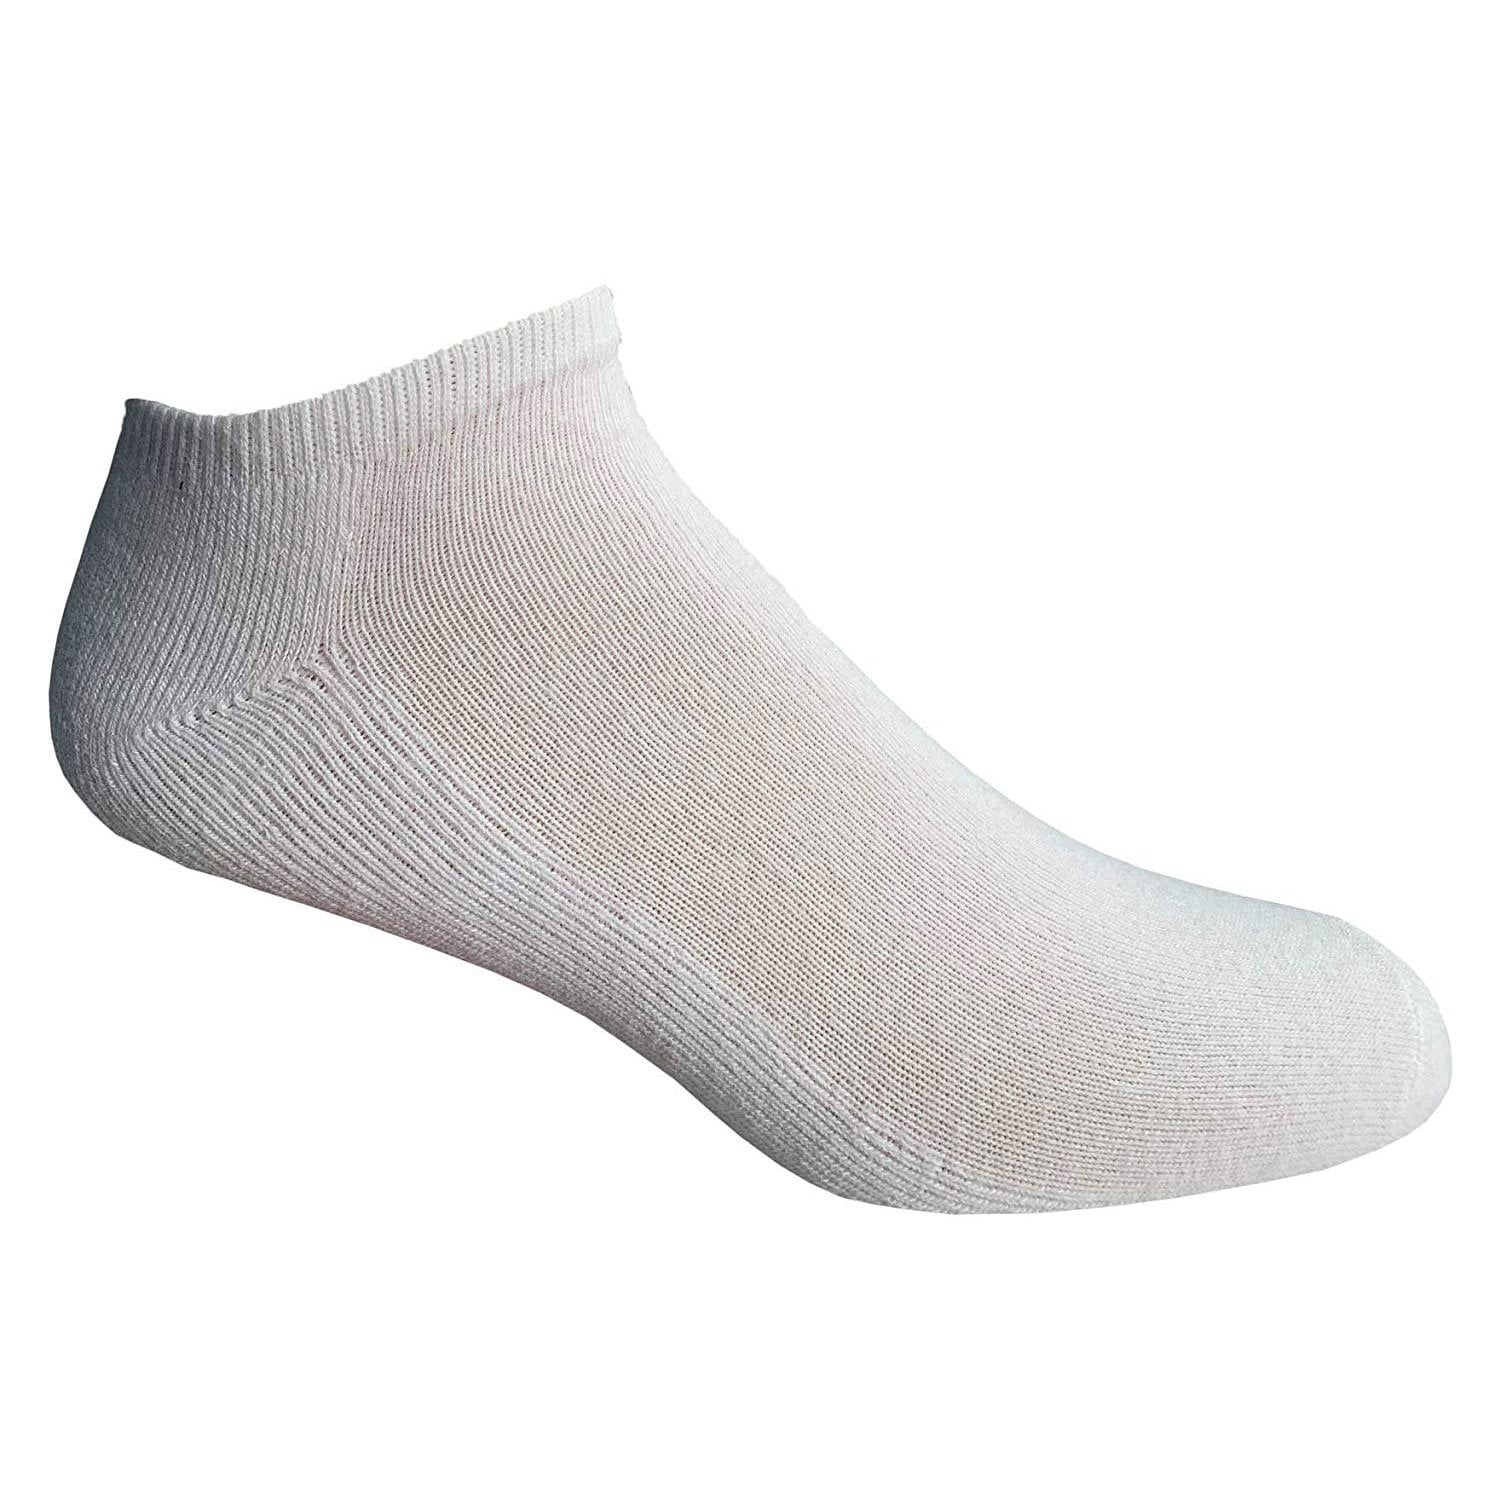 HSM327G Z Men Low Cut Grey Sports Socks Size 10-13 Wholesale 12 Pairs Lot 